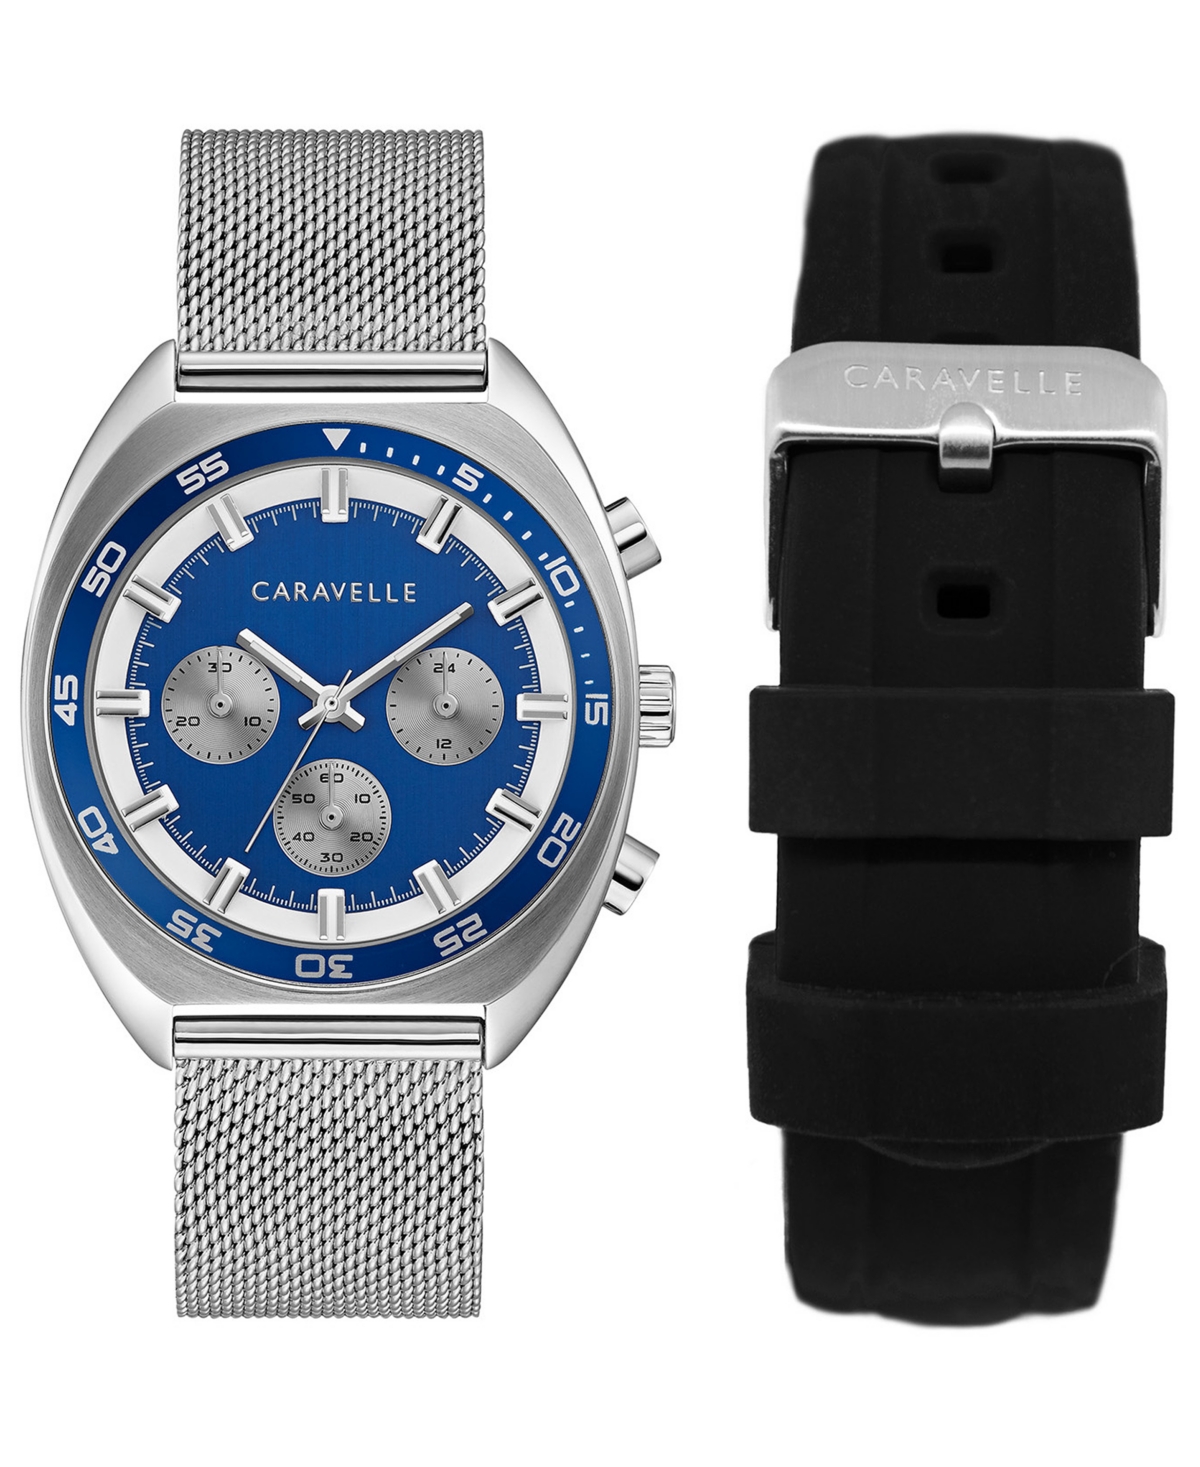 Designed by Bulova Men's Chronograph Stainless Steel Mesh Bracelet Watch 40mm Box Set - Stainless Steel/Black